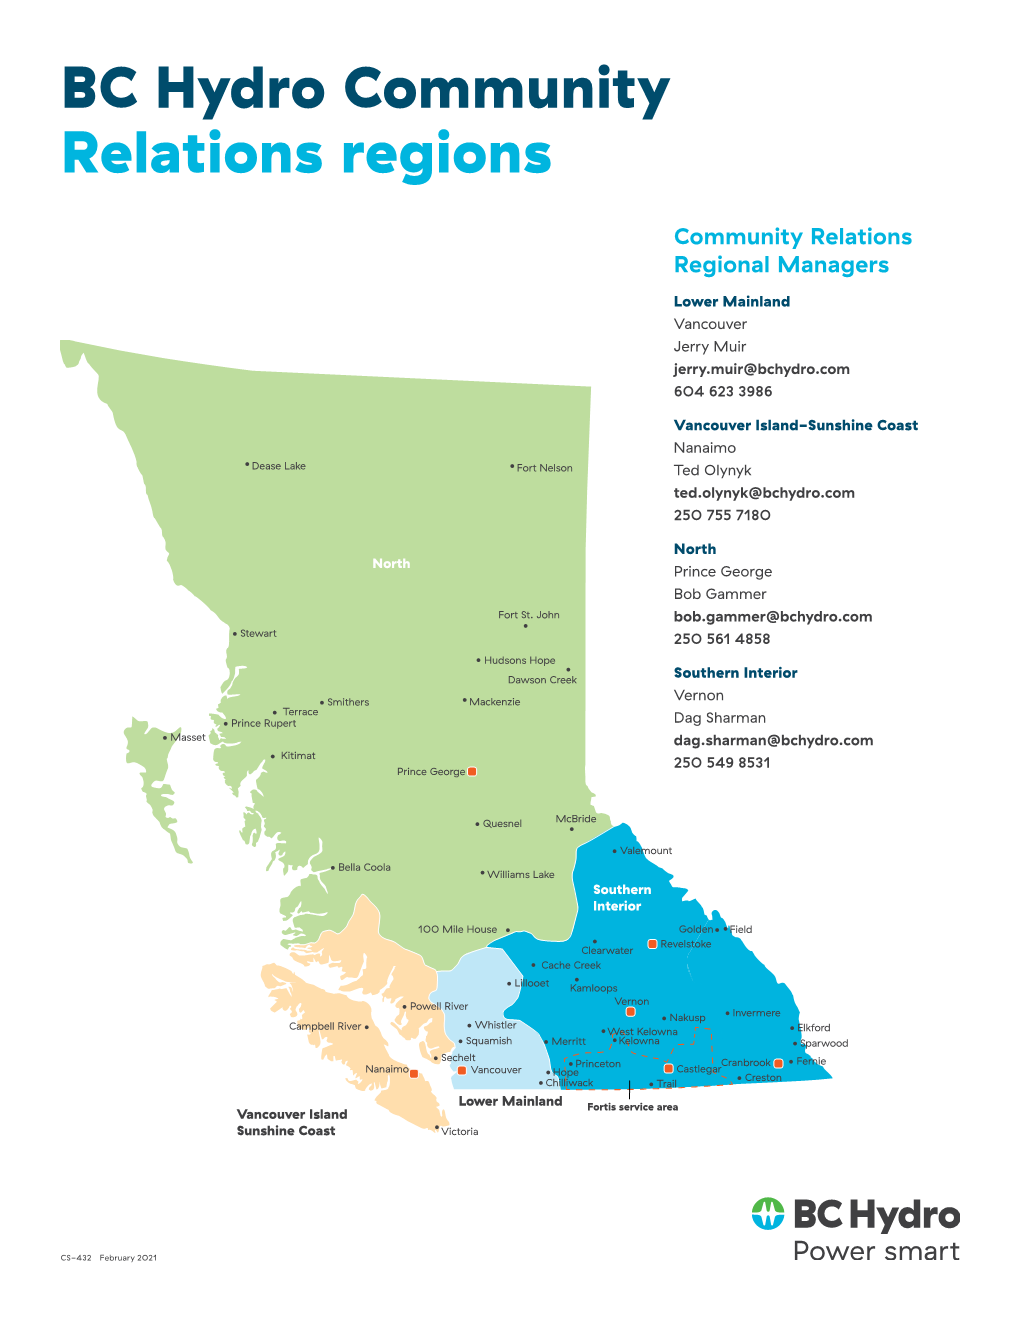 BC Hydro Community Relations Regions